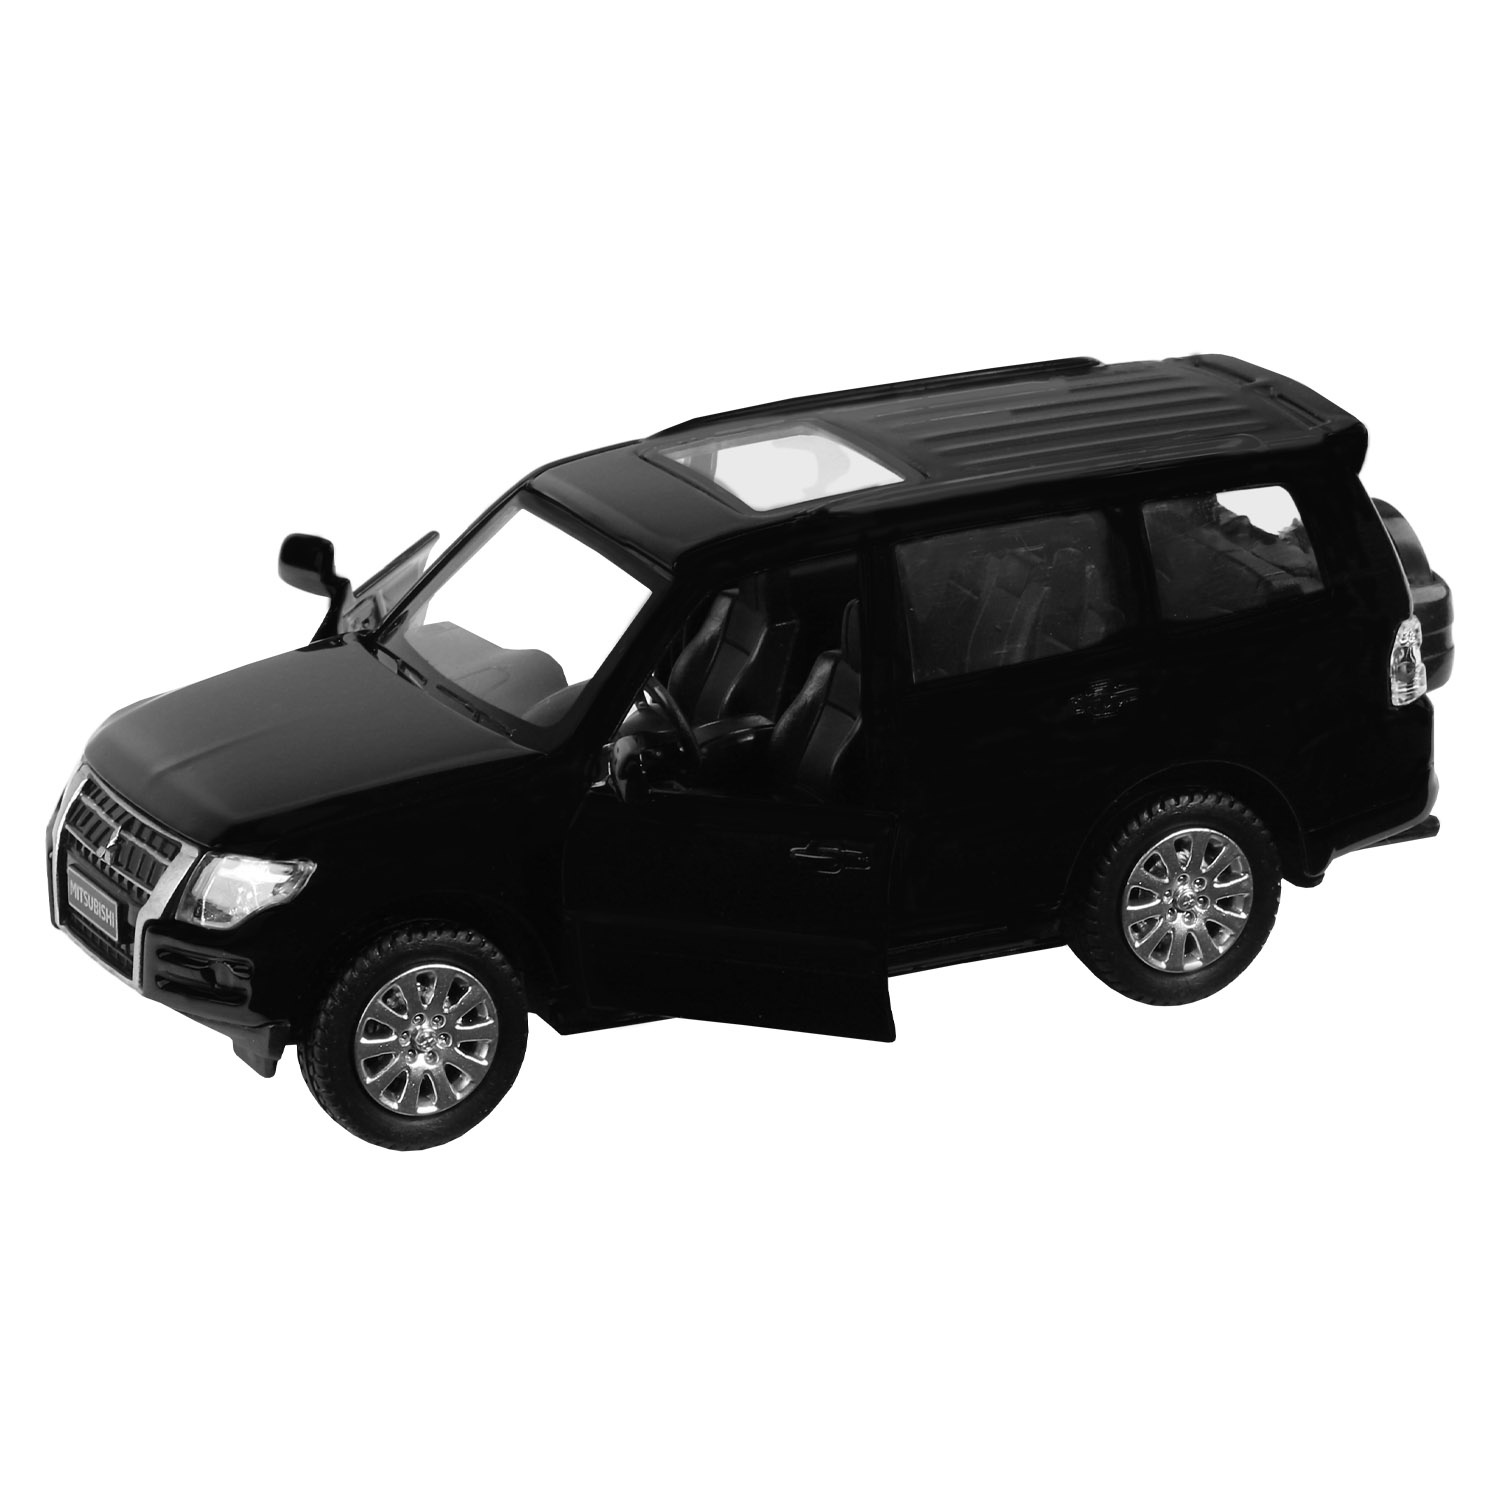 Модель автомобиля Автопанорама Mitsubishi Pajero 4WD Tubro, черный, 1/43 JB1251429